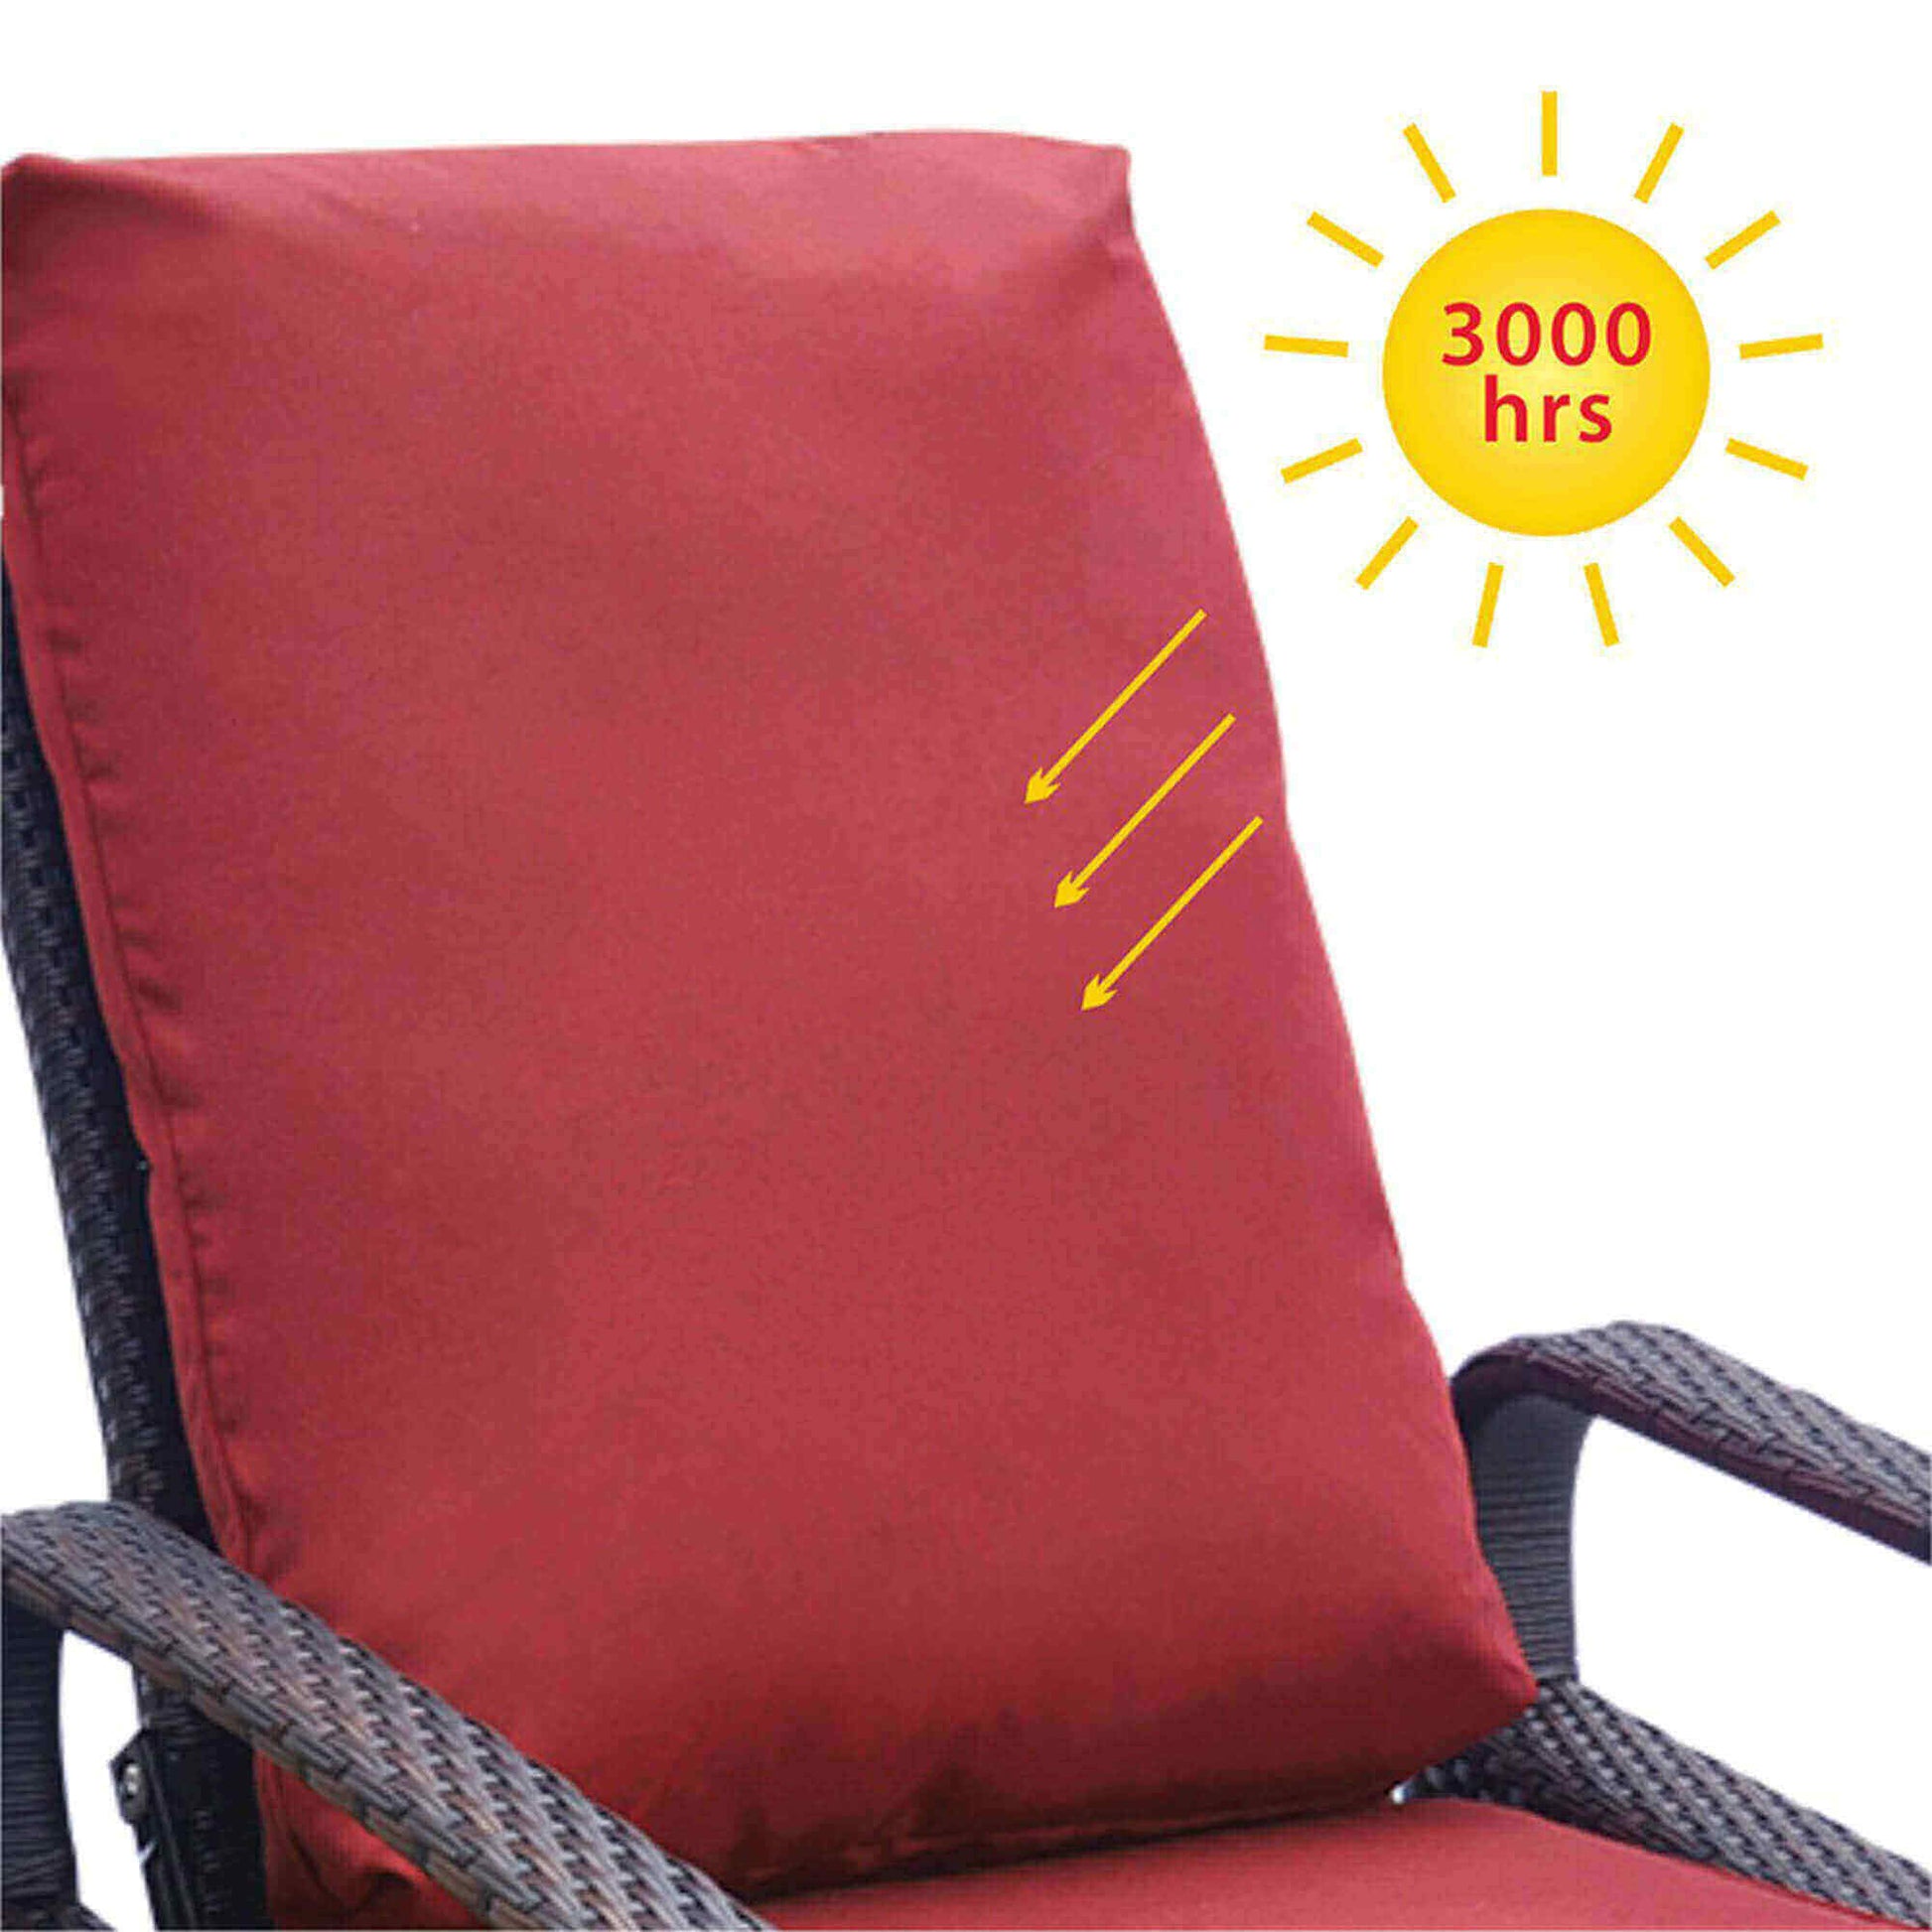 ATR Recliner Cushion Cover | Patio Wicker Recliner Cushion Cover